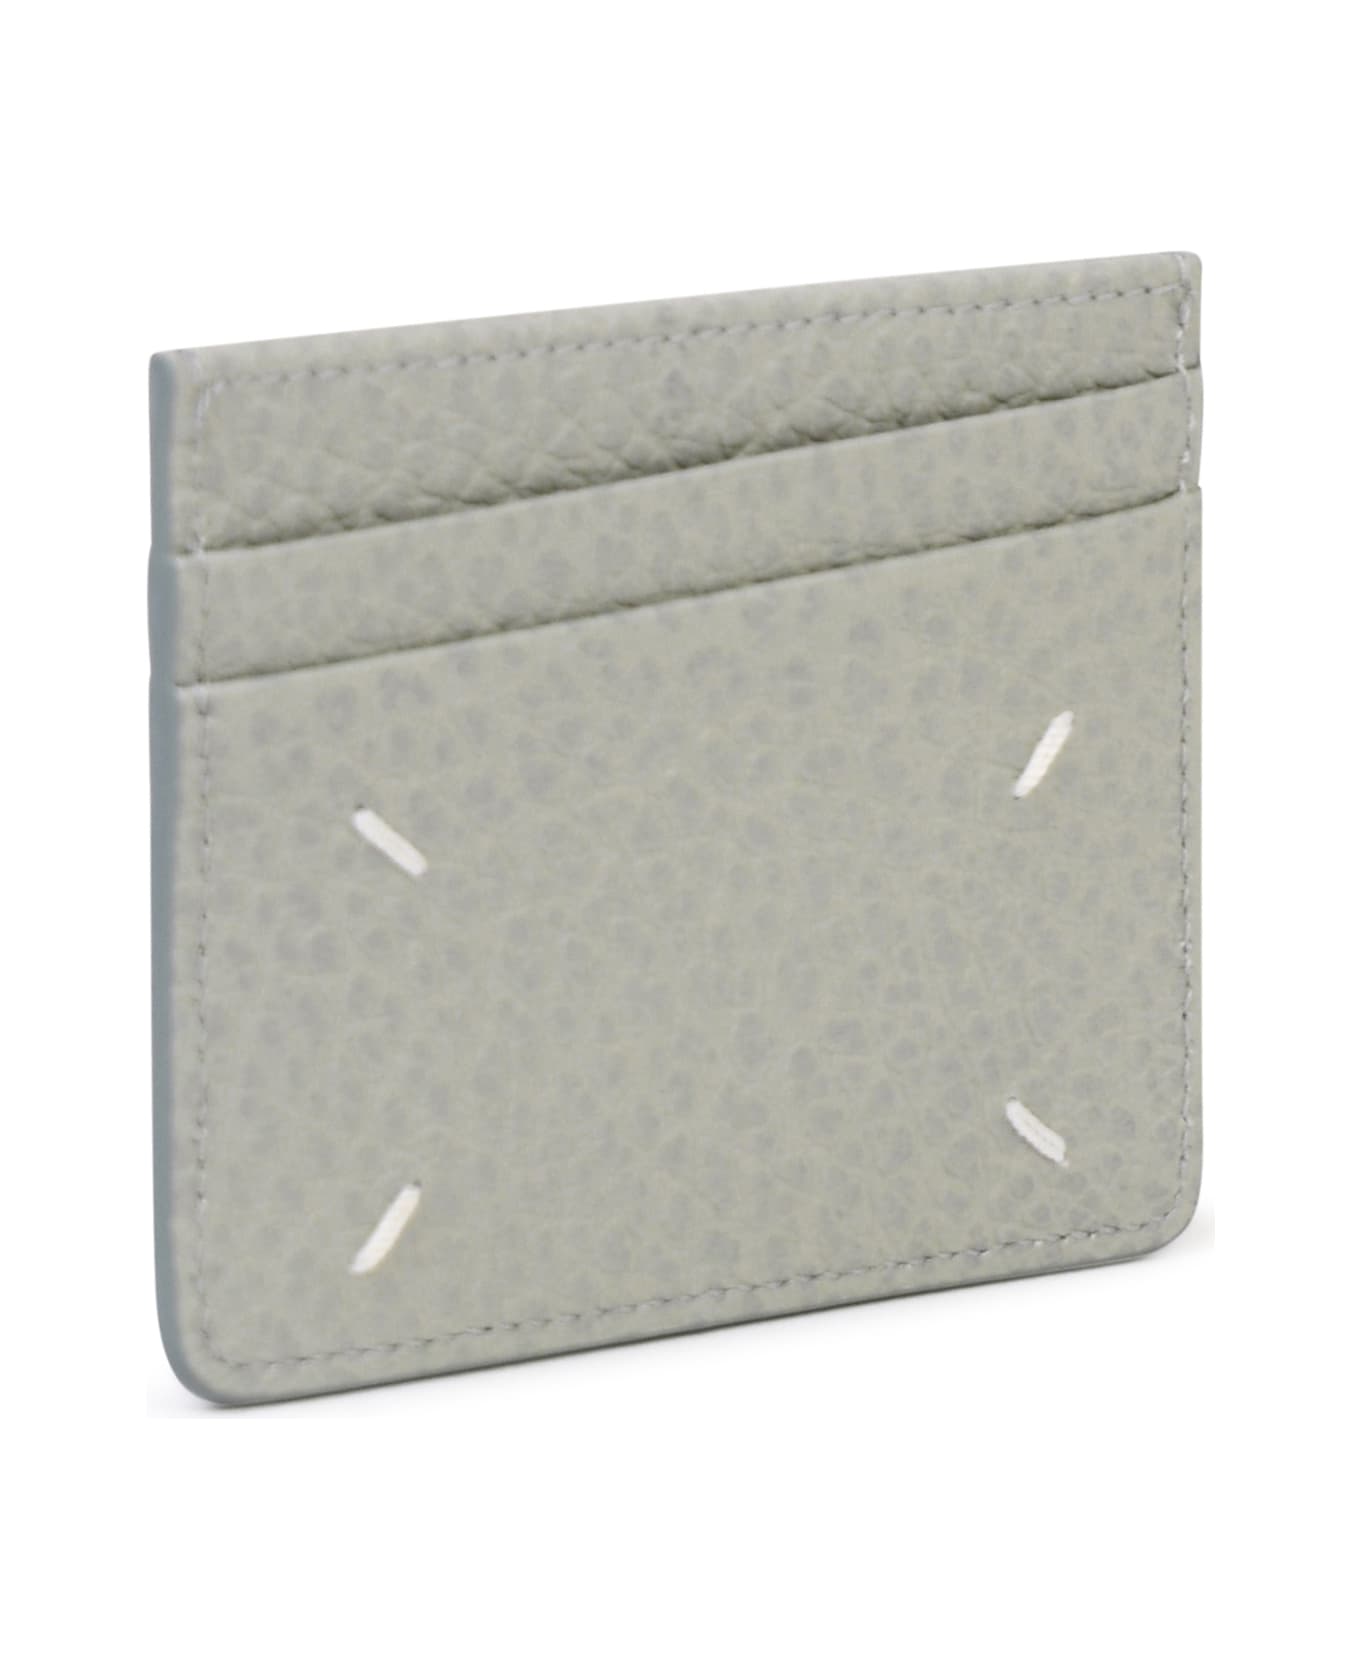 Maison Margiela 'four Stitches' Ansiette Leather Card Holder - Green 財布